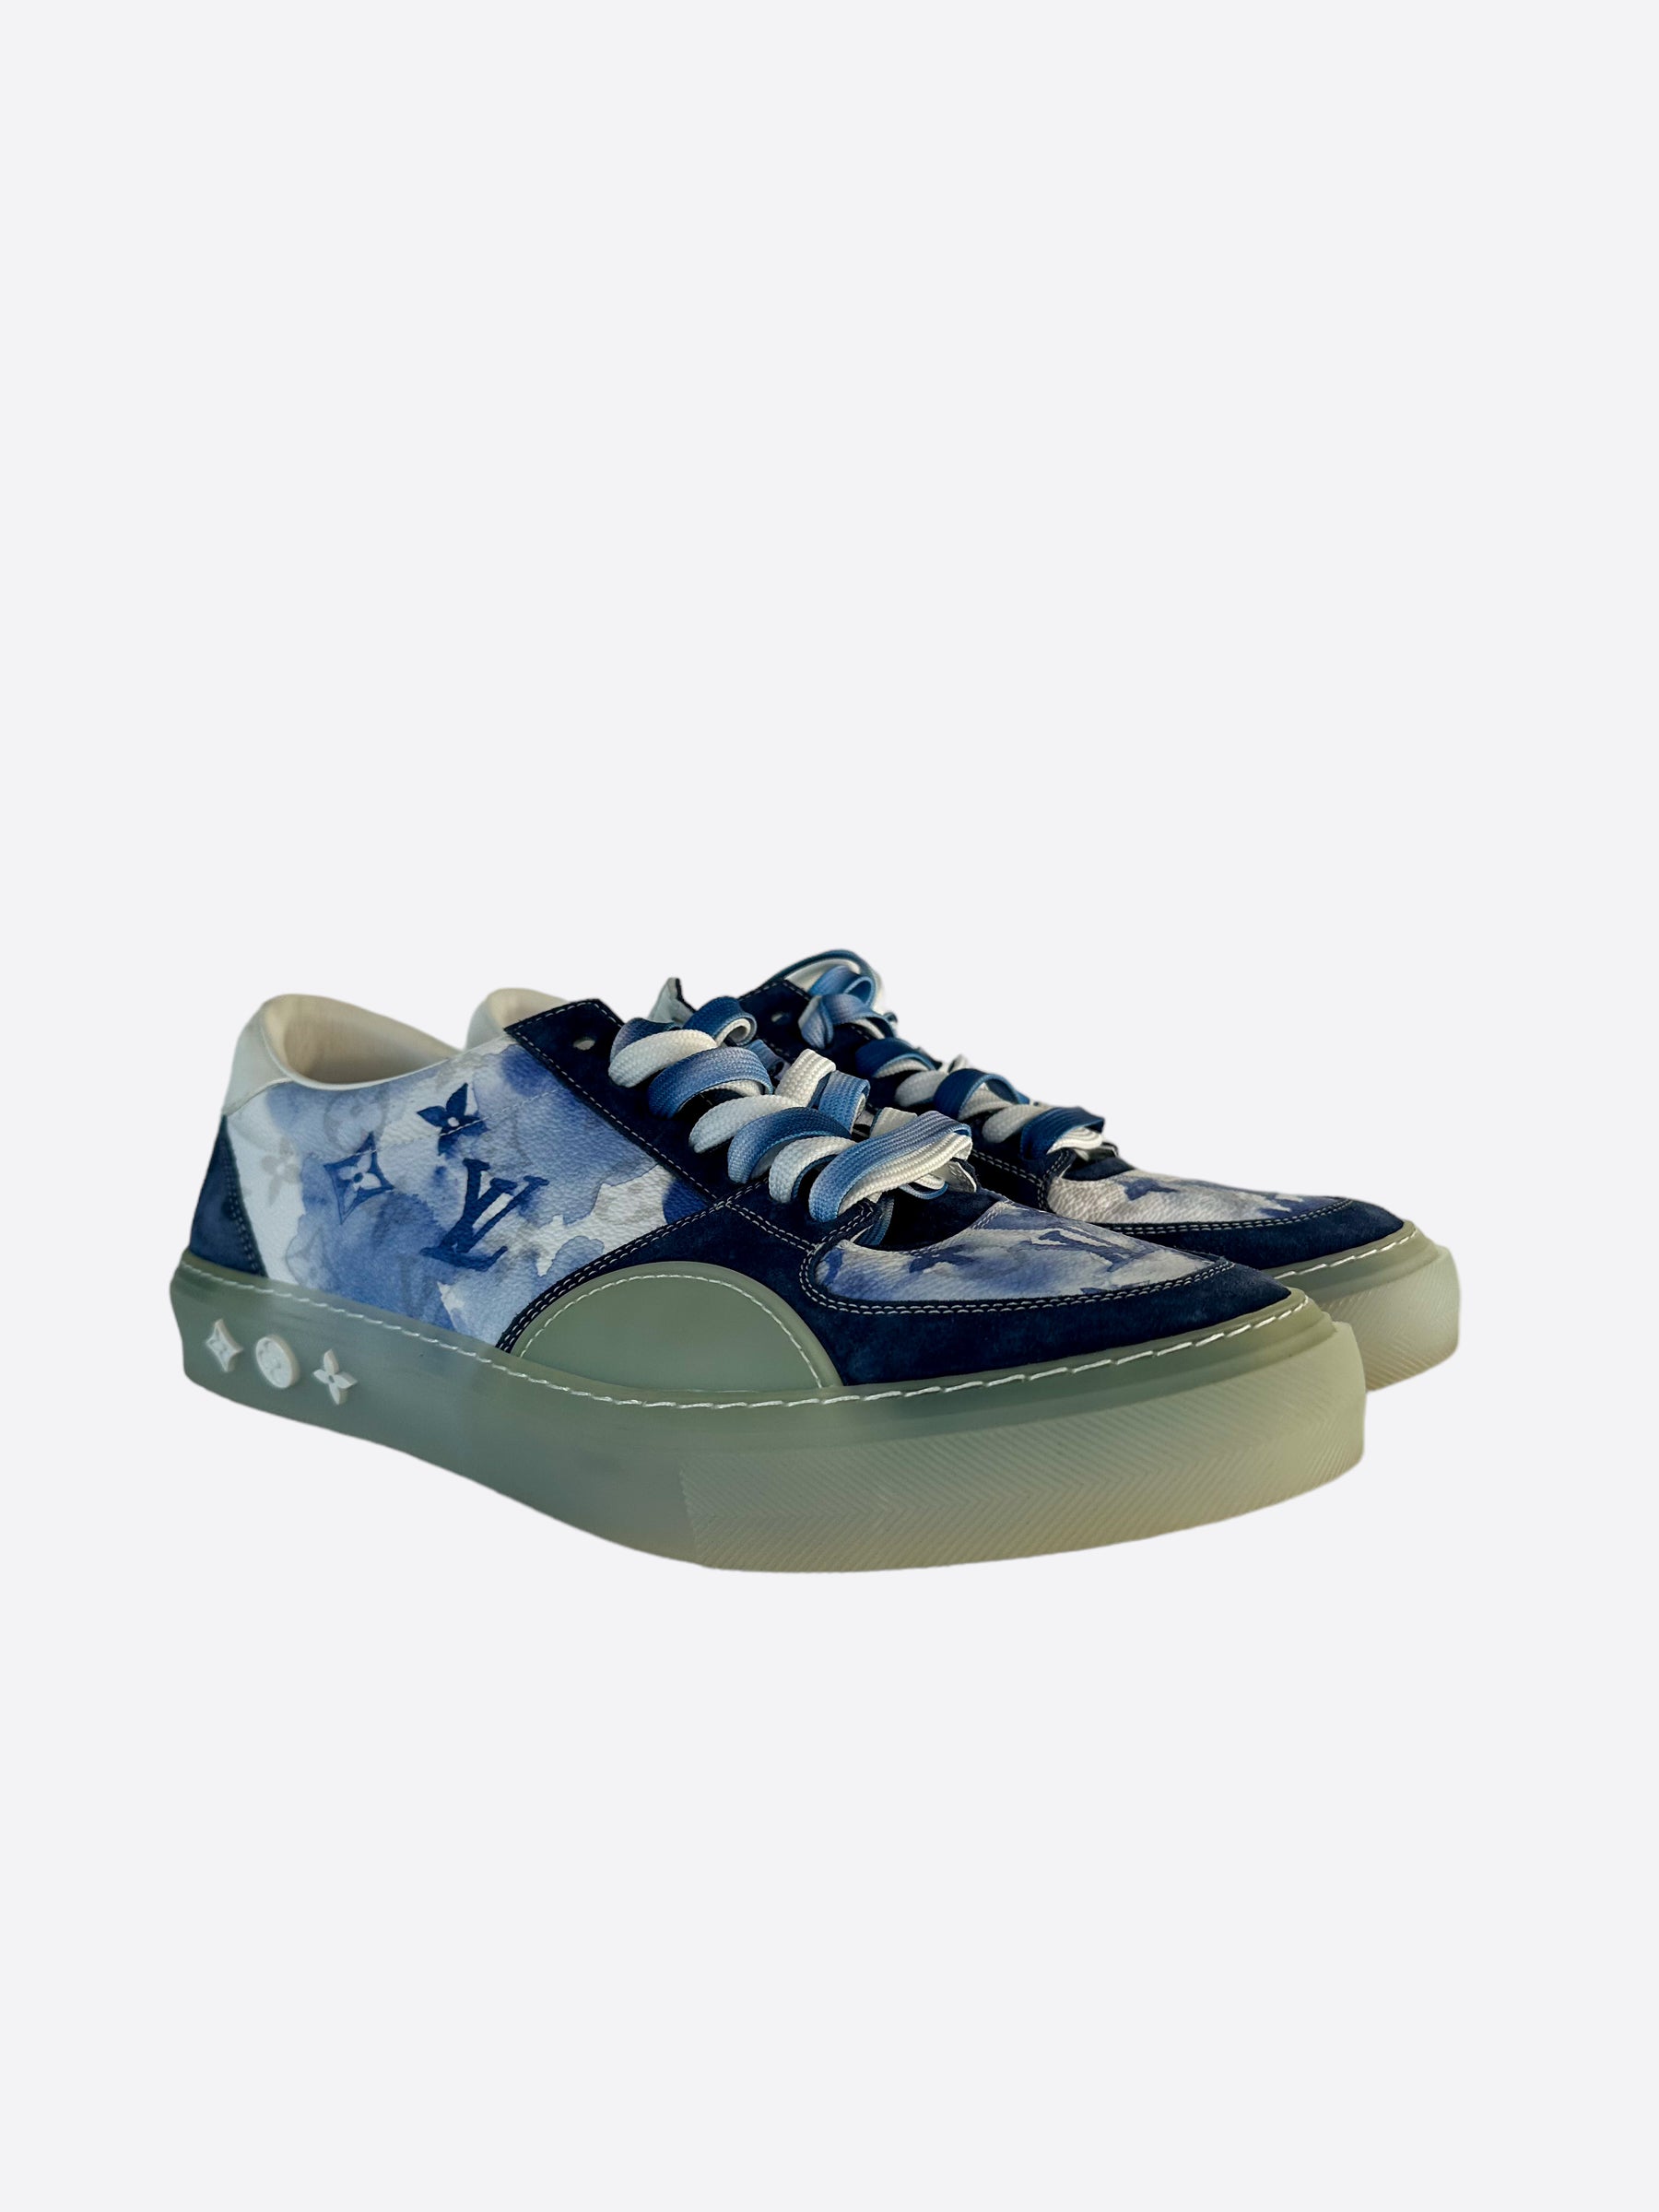 Louis Vuitton Neon Green & Blue Gradient 'LV Ollie' Sneakers